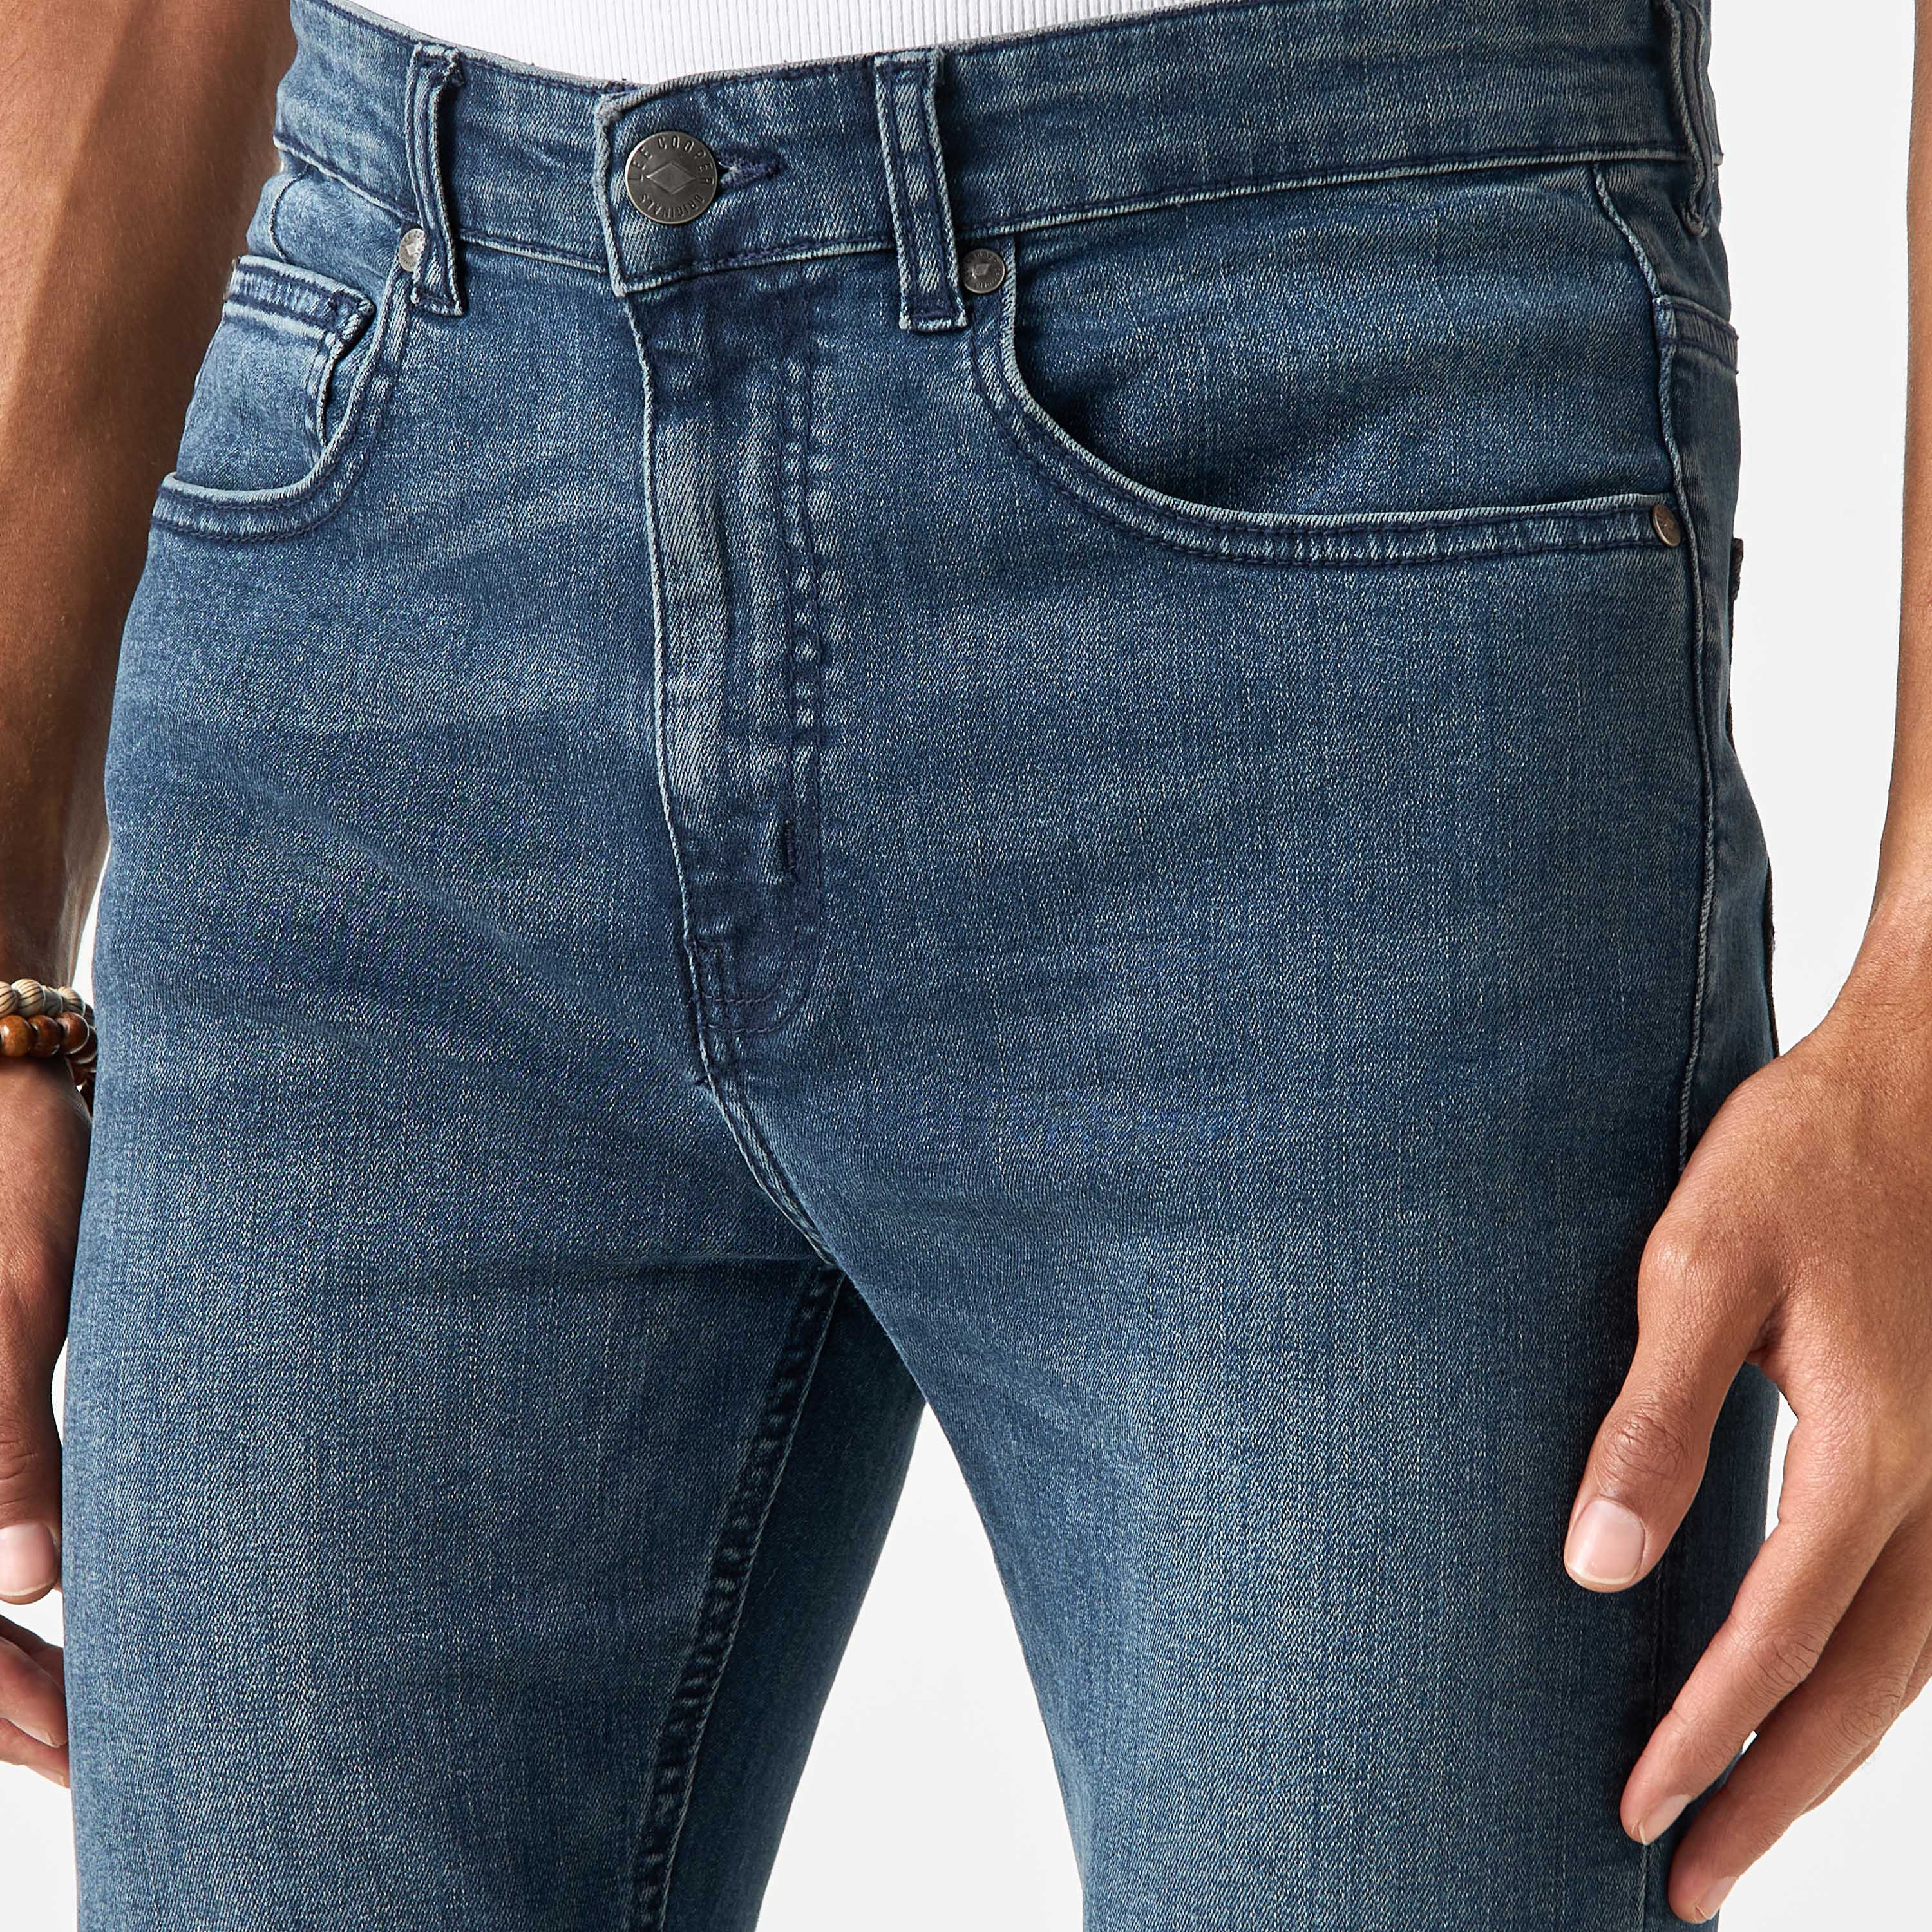 Buy Lee Cooper Jeans with Pocket Detail and Zip Fly Closure | Splash UAE